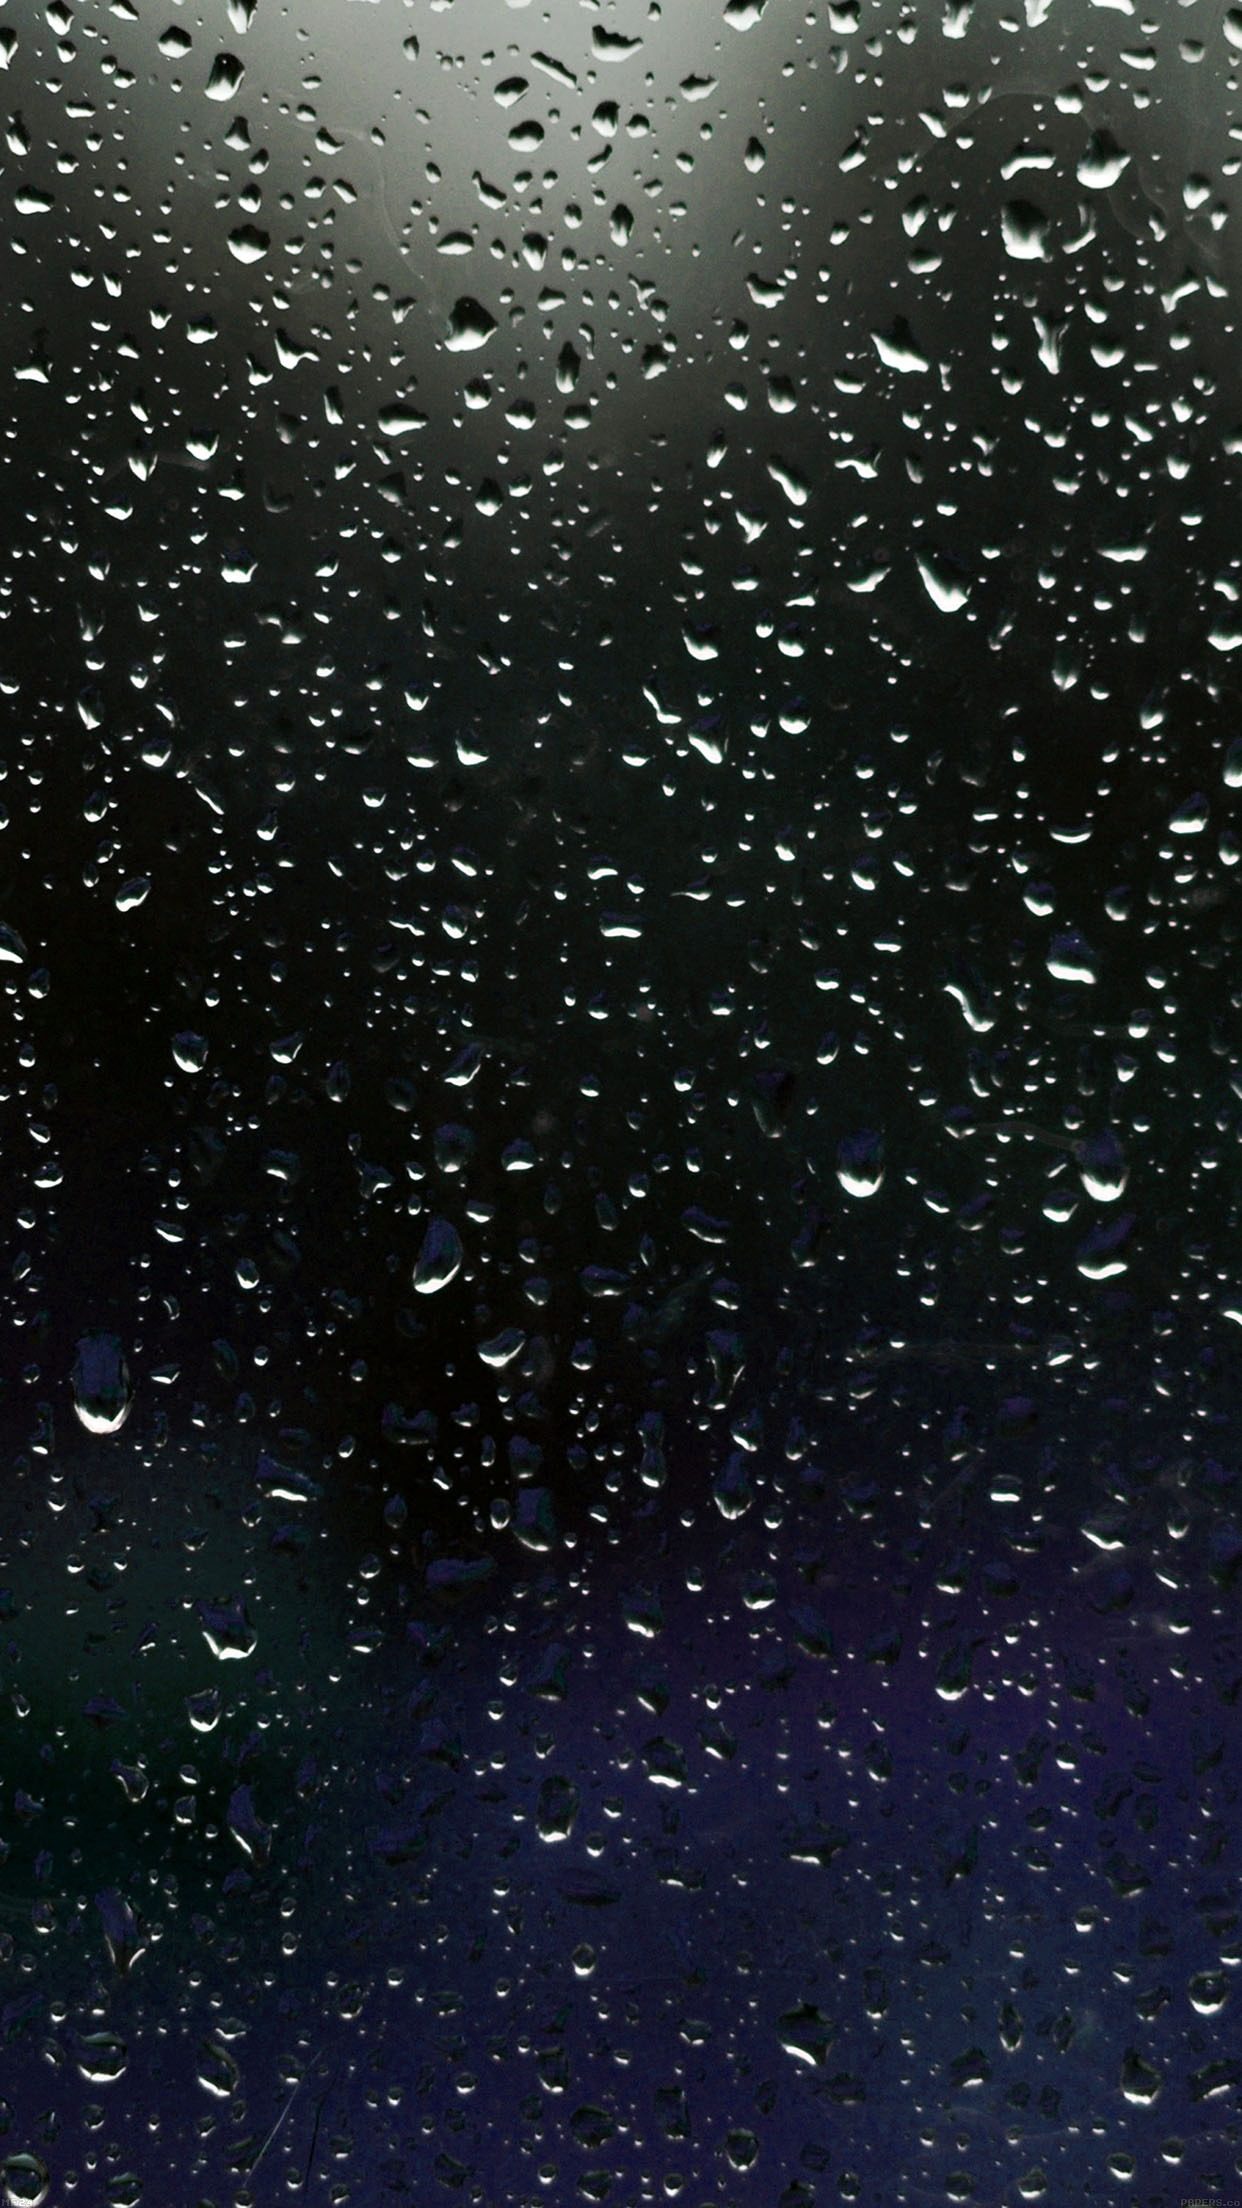 Raining Windows 10 Rain Drops Nature Android wallpaper